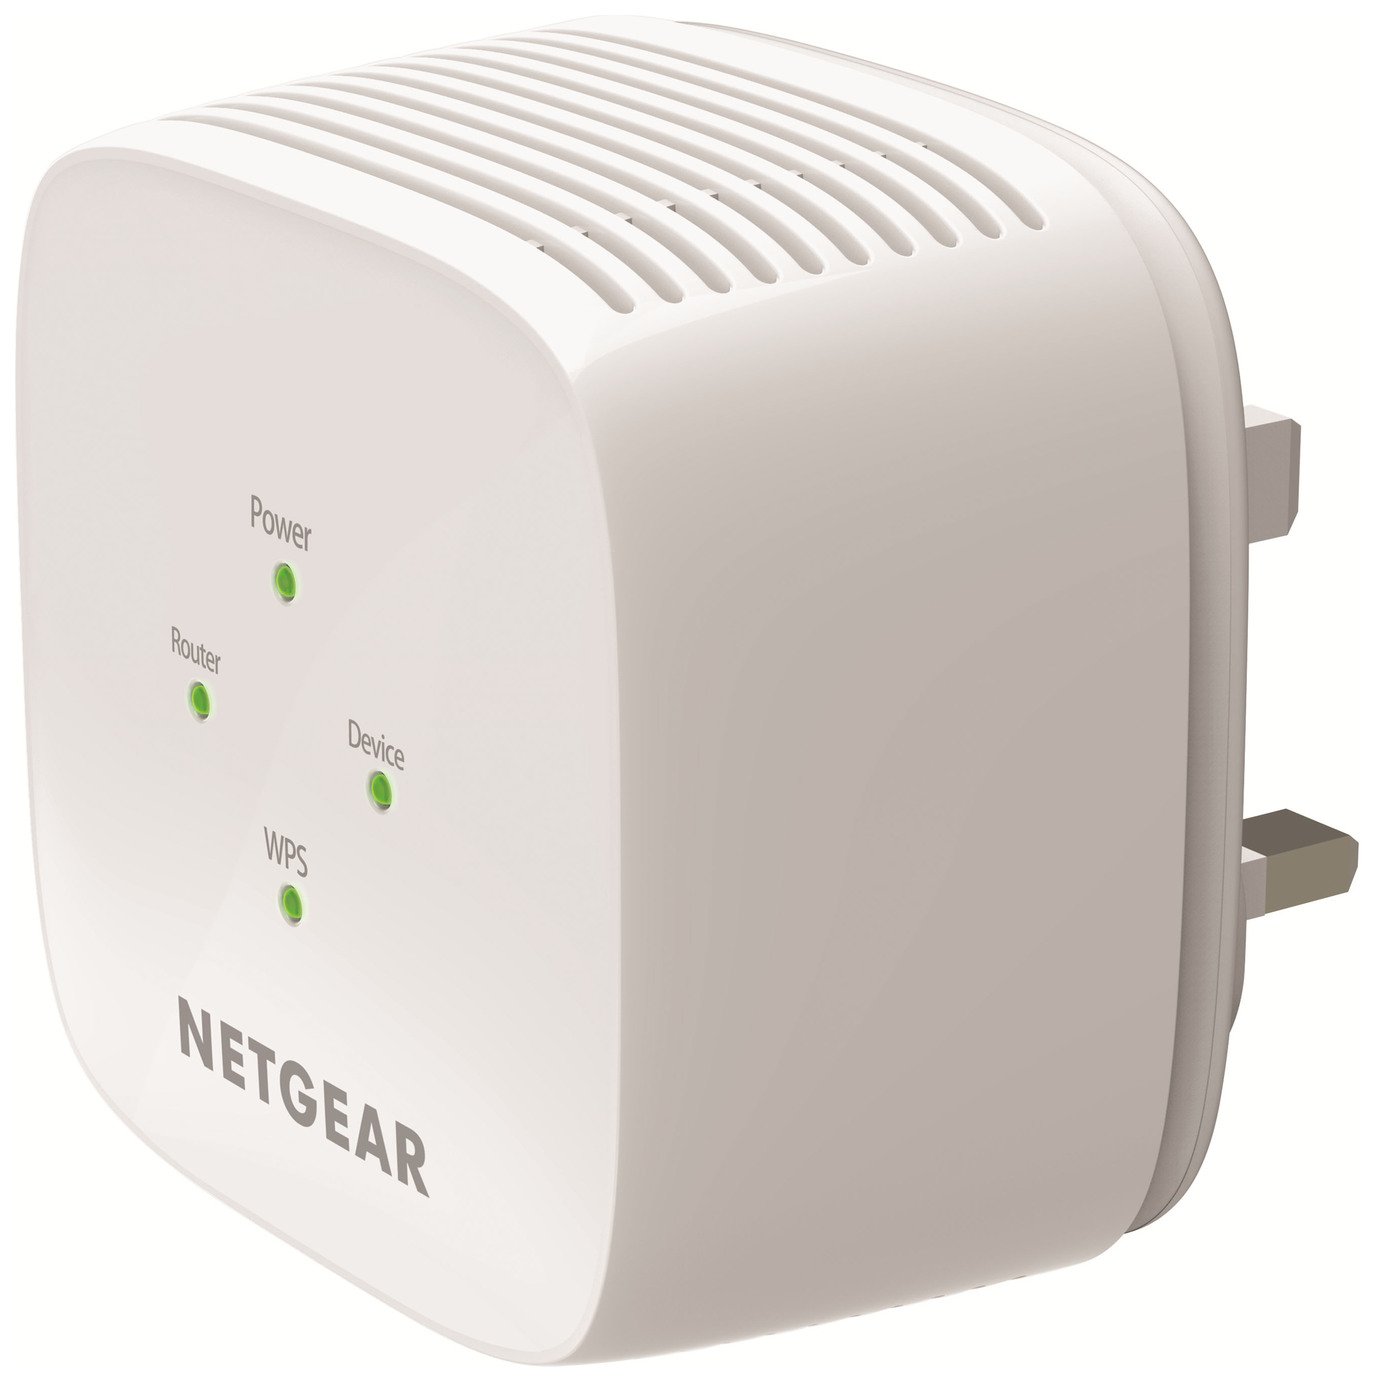 Netgear AC750 Wi-Fi Range Extender